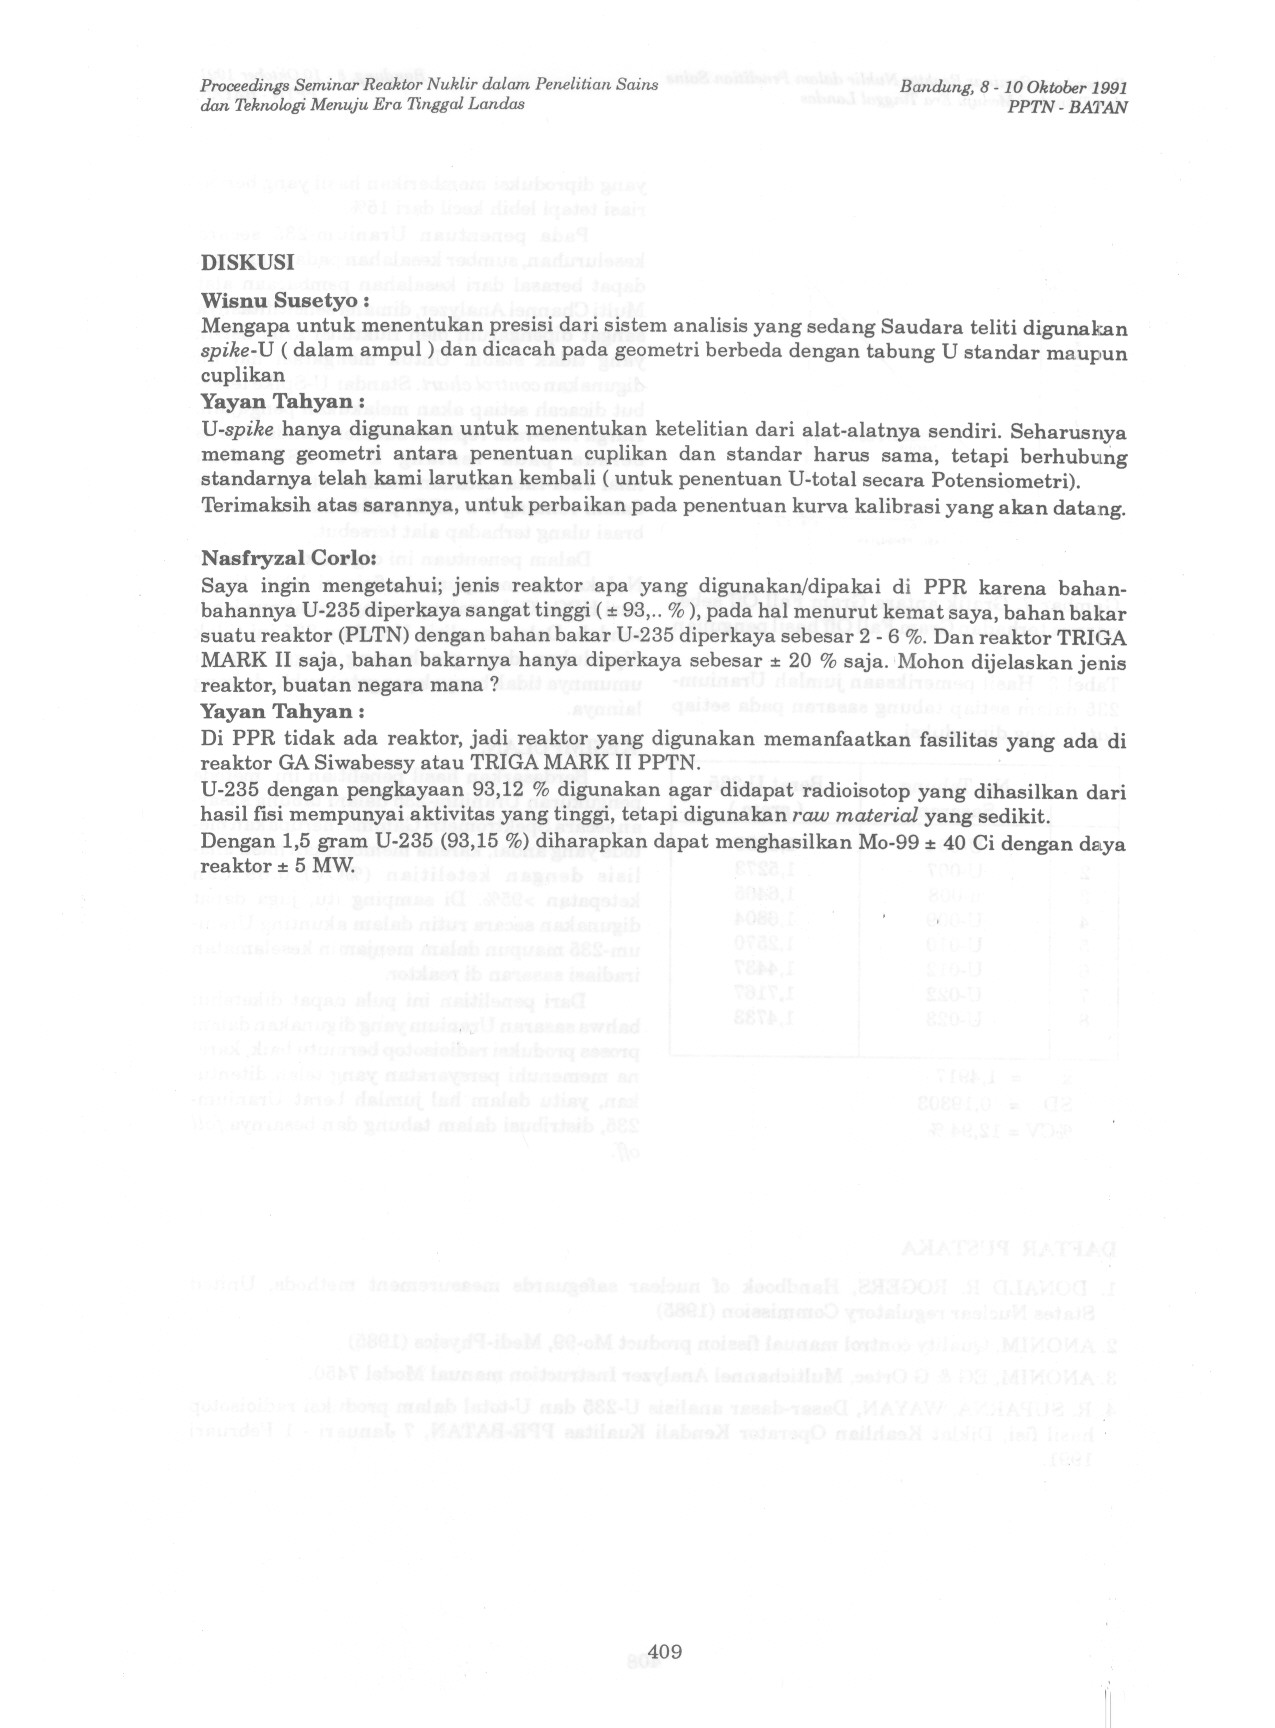 II Proceedings Seminar Reaktor Nuklir dalum Penelitian Sains dm1, Teknologi Menuju Era Tinggal Landas Bclltdung, 8-10 Oktober 1991 PPTN - BA'J'AN DISKVSI Wisnu Susetyo : Mengapa untuk menentukan